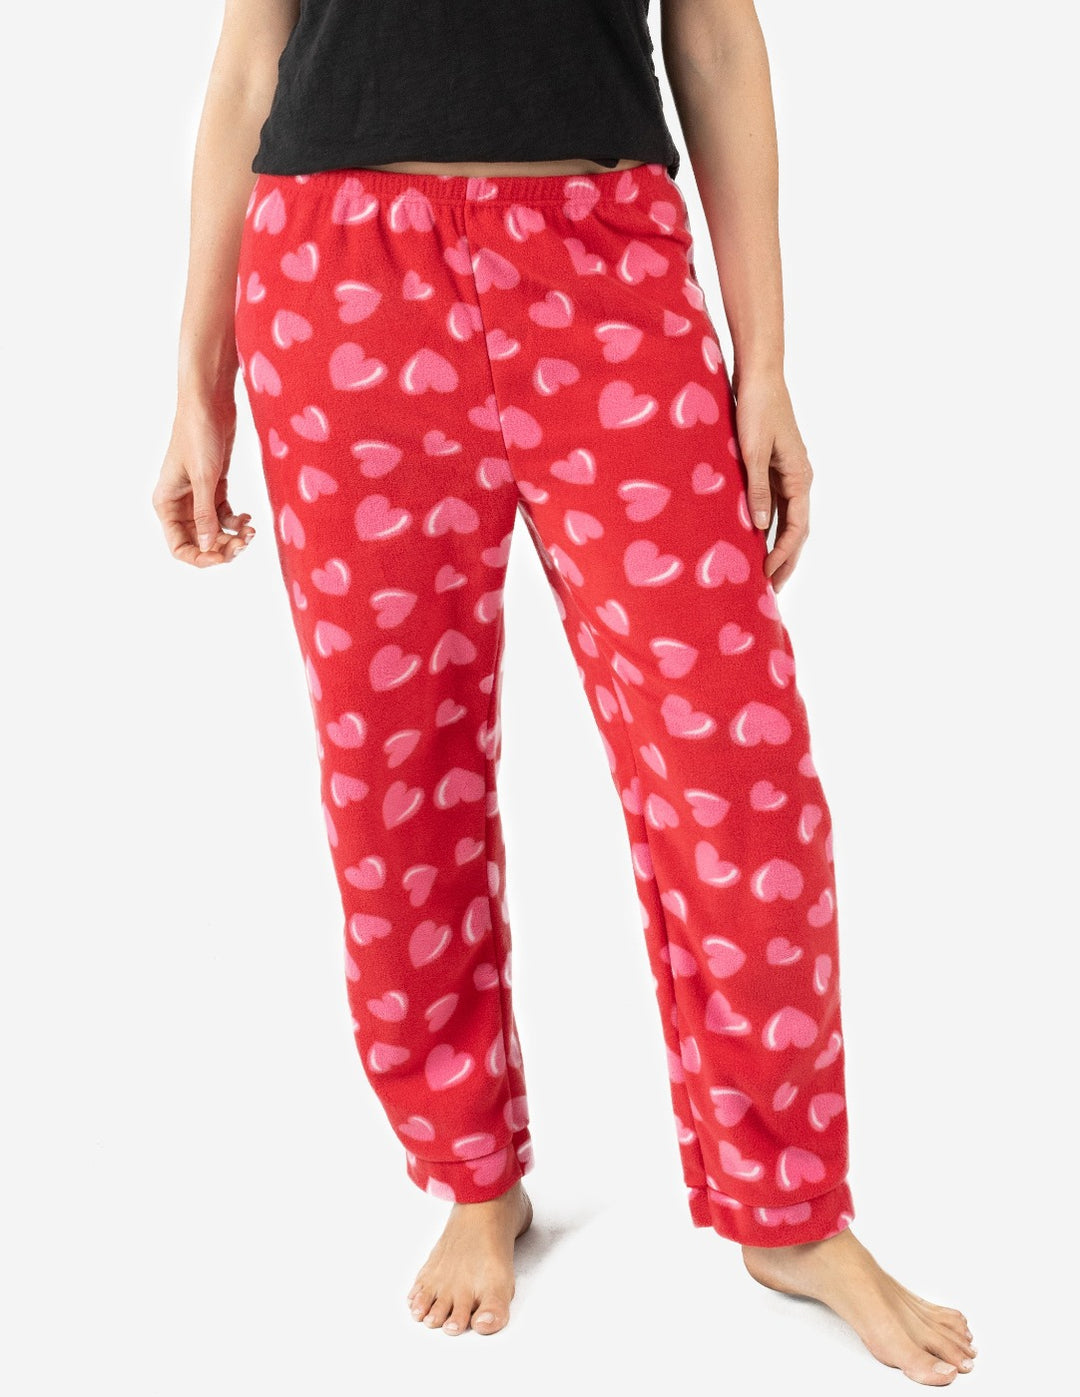 Just Be. Apparel Fleece Pajama Pants for Women